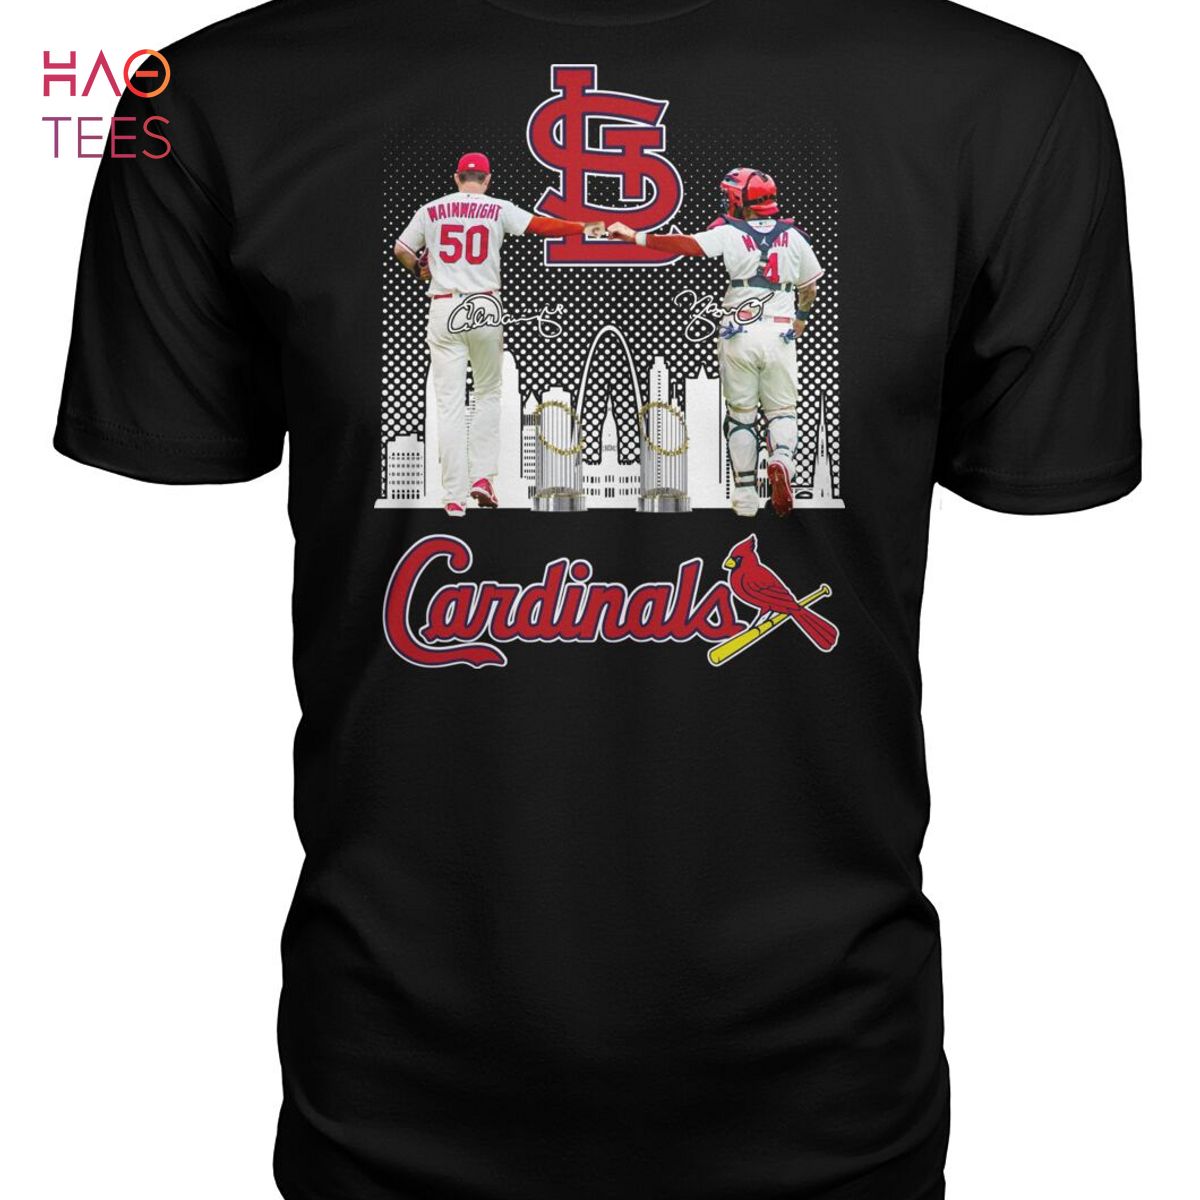 Unisex St. Louis Cardinals T-Shirts in St. Louis Cardinals Team